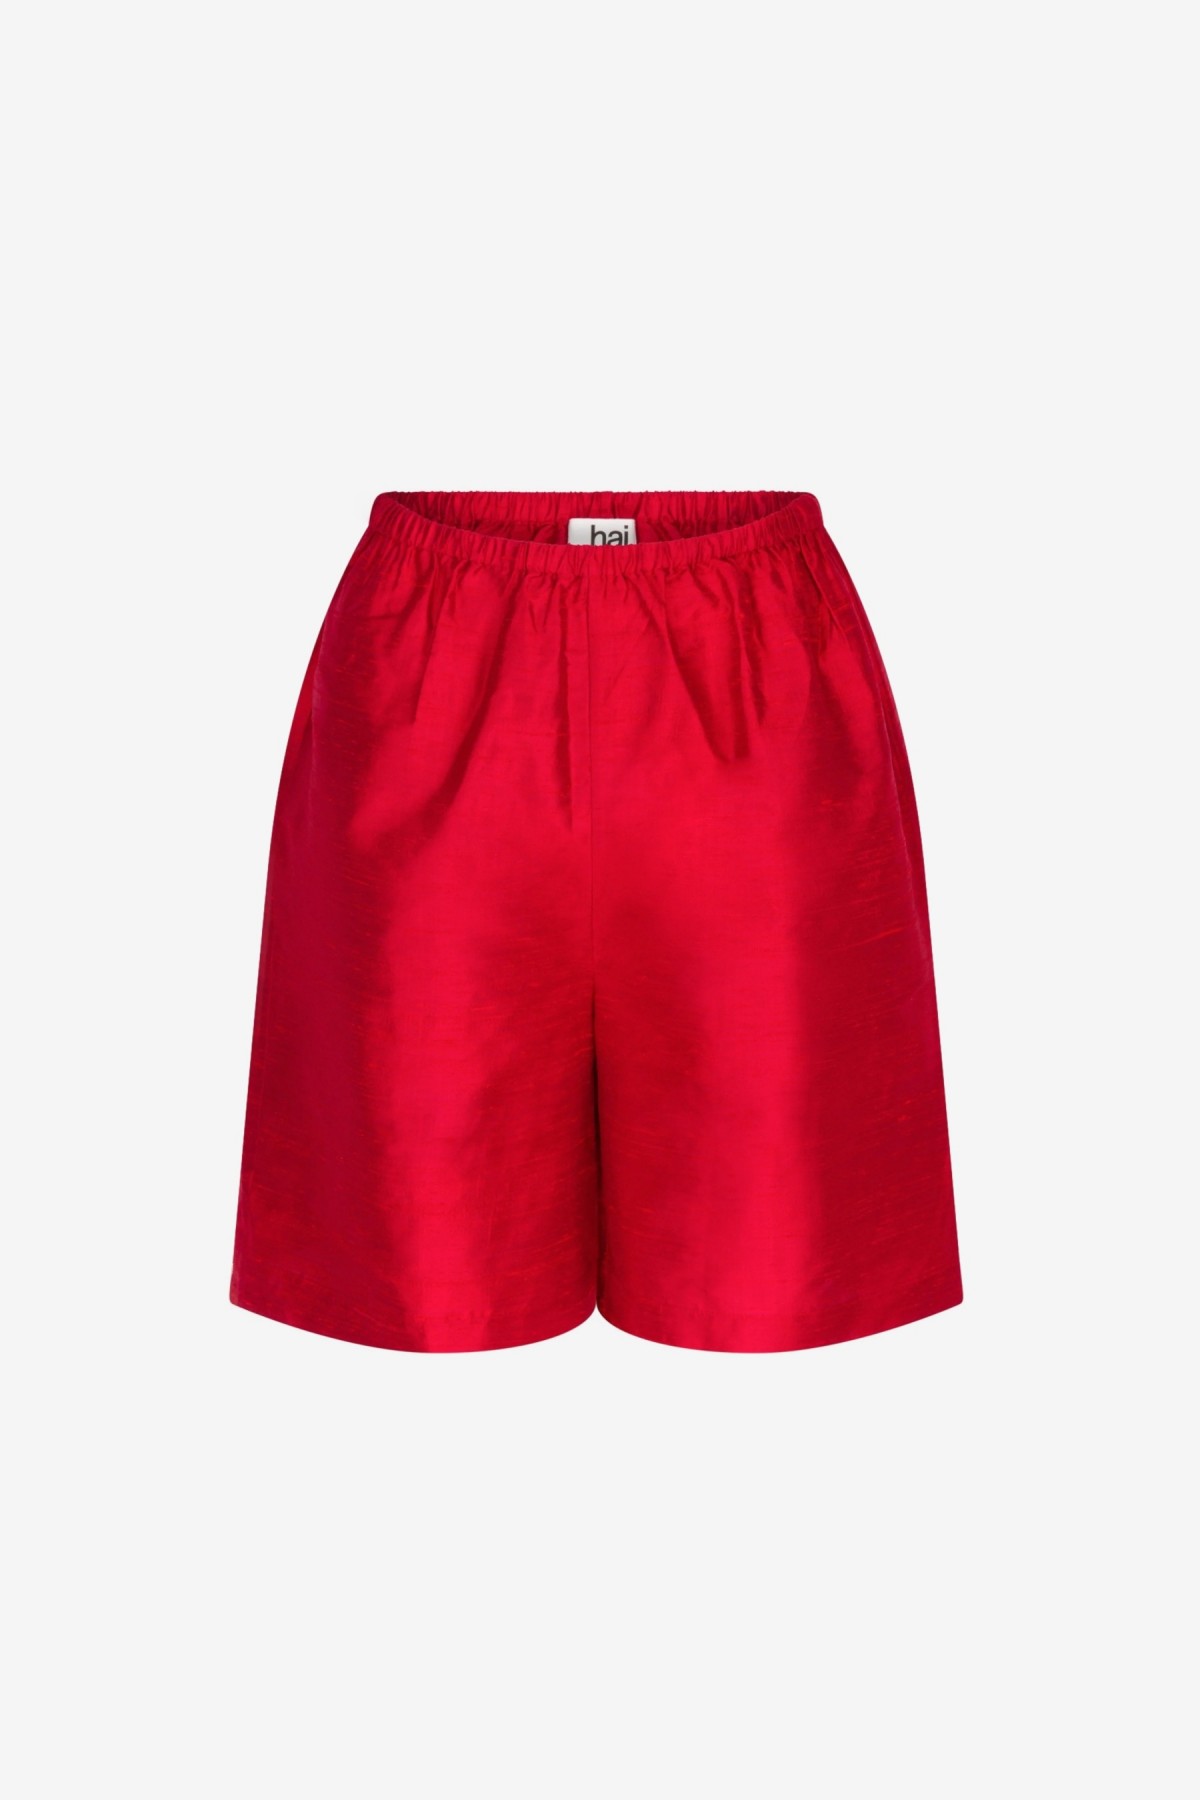 Hai Adeline Shorts in Red